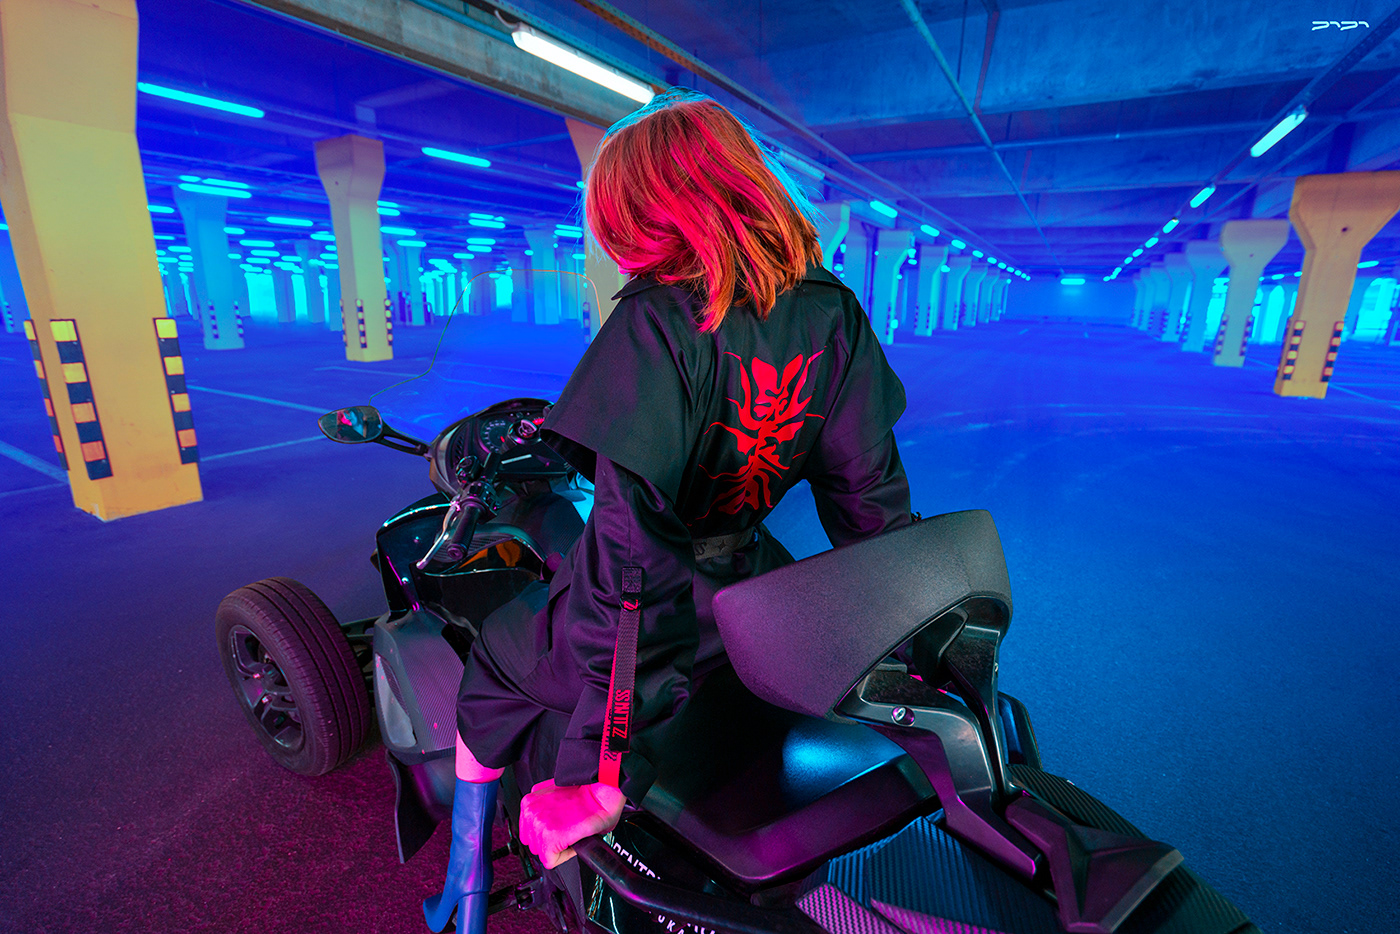 acid concrete Cyber2020 Cyberpunk future girl motocycle neon underground Urban